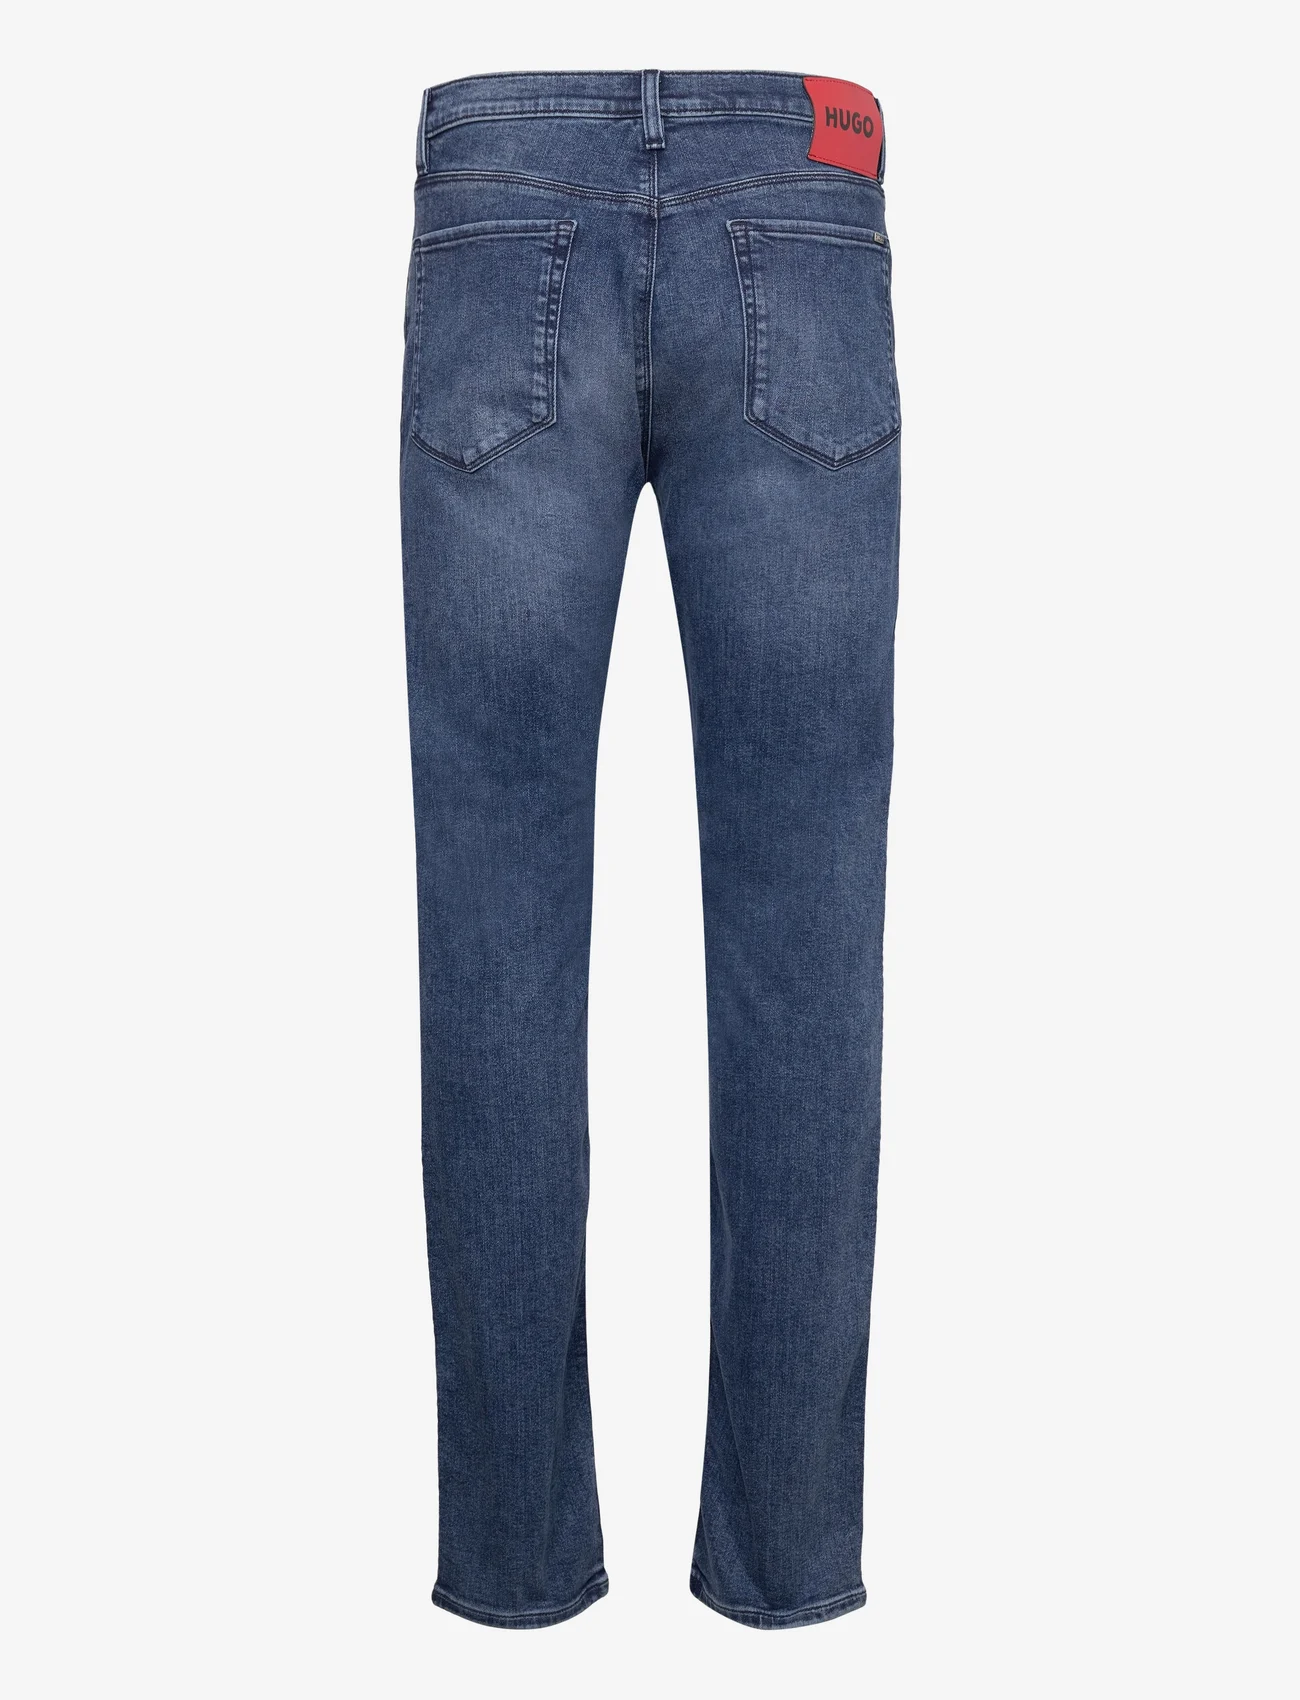 HUGO - HUGO 708 - slim jeans - medium blue - 1